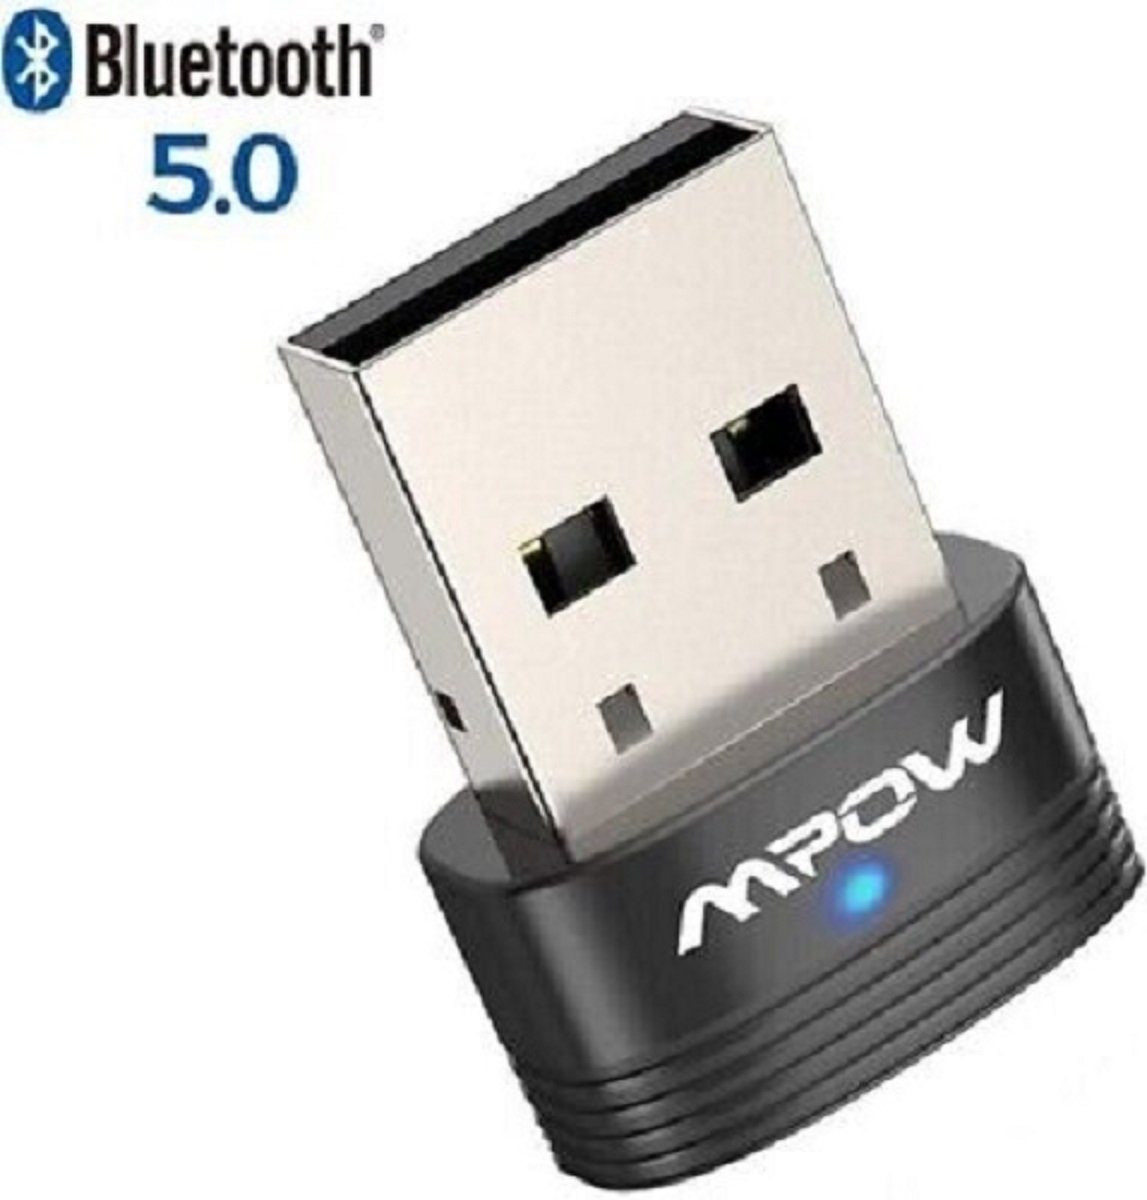 5.0 Mpow Dongle USB Bluetooth Bluetooth®-Sender Empfänger Sender